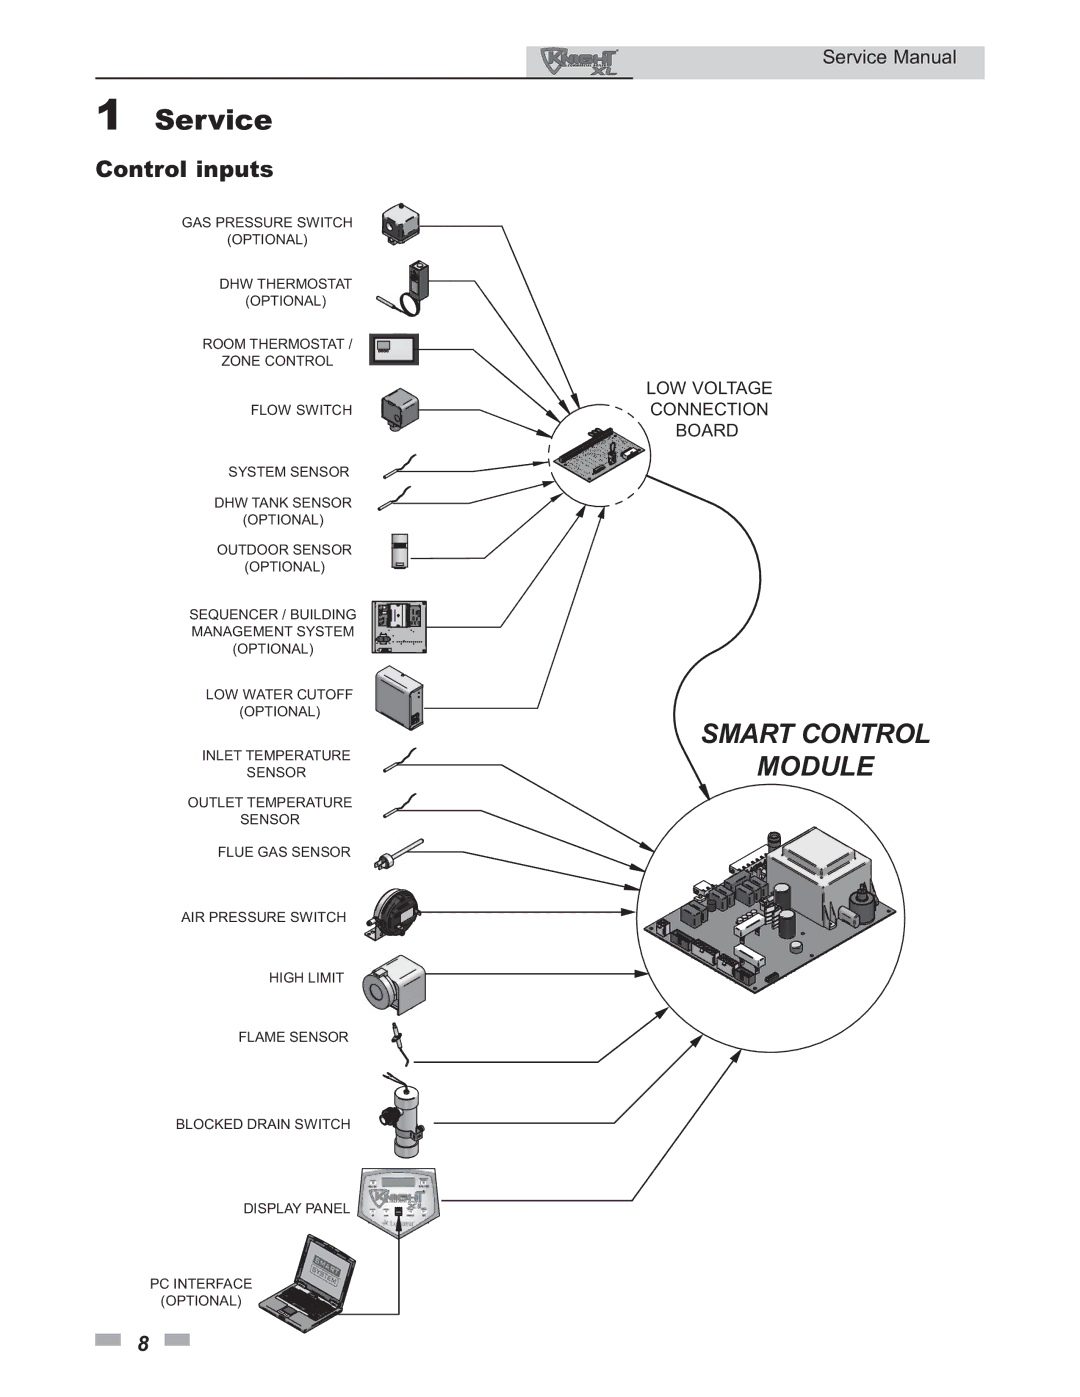 Lochinvar 399 - 800 service manual Control inputs 